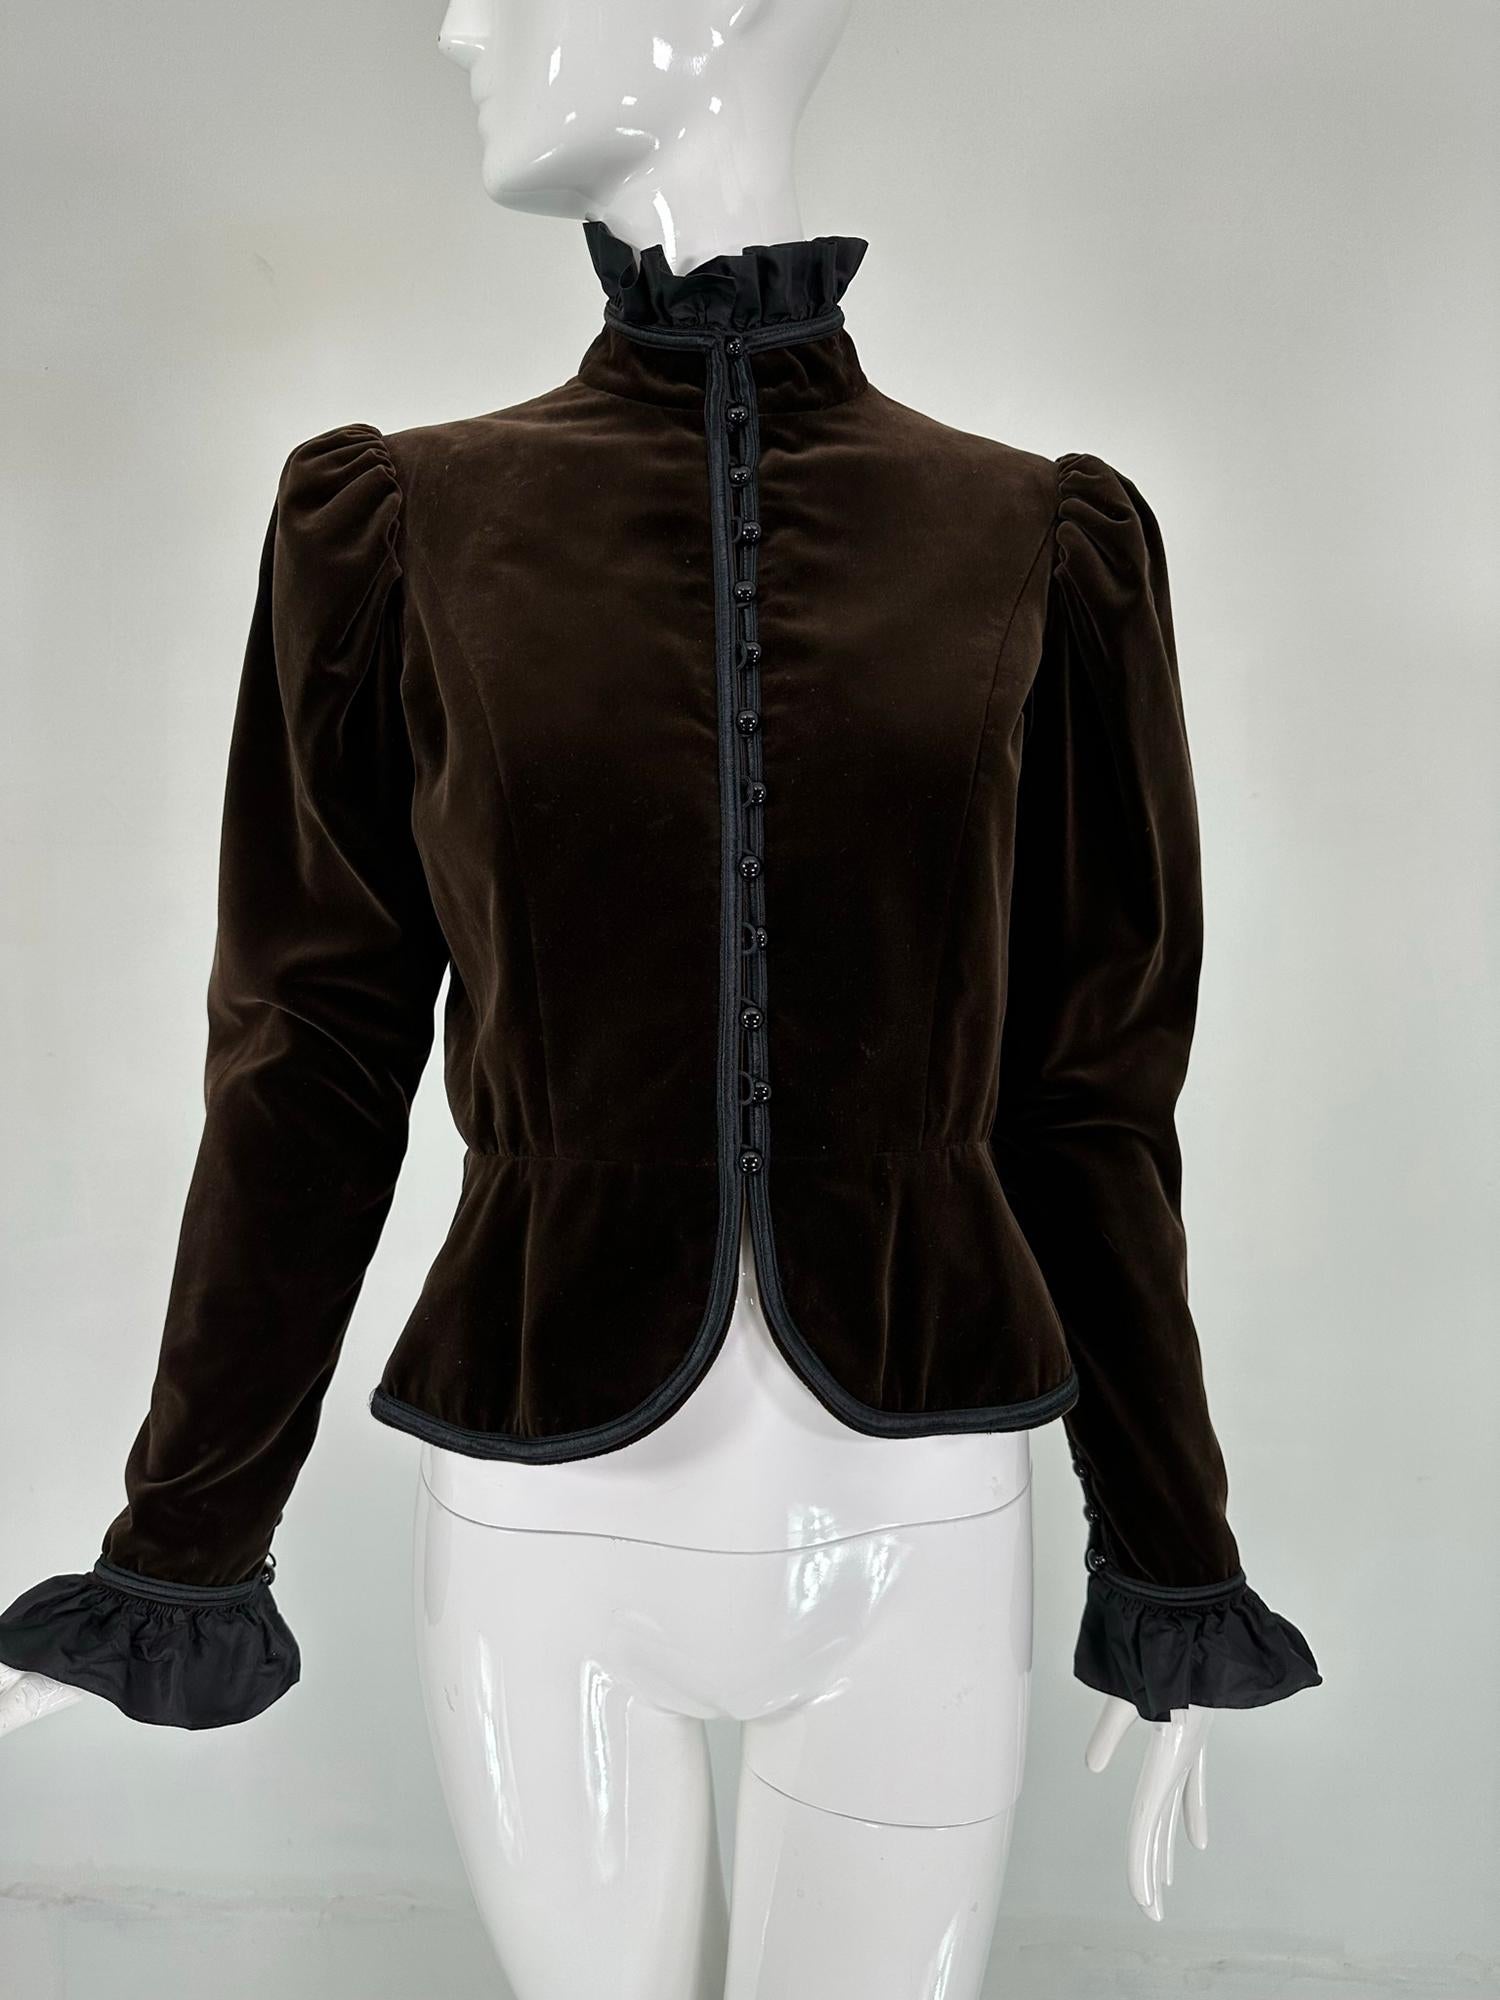 Yves Saint Laurent Rive Gauche Chocolate Velvet Victorian Style Jacket 1971-72 For Sale 9